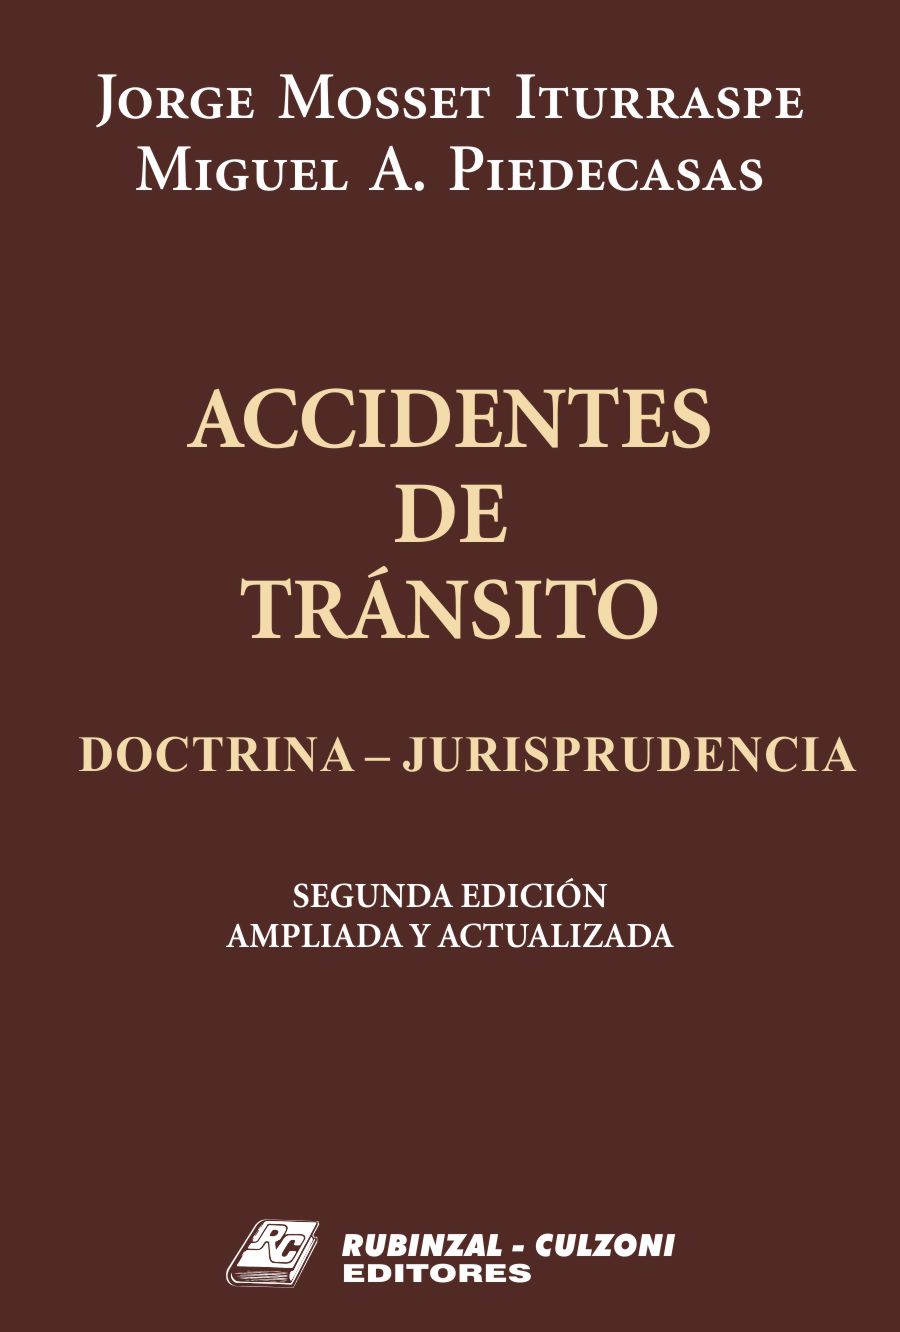 Accidentes de tránsito (Doctrina - Jurisprudencia).